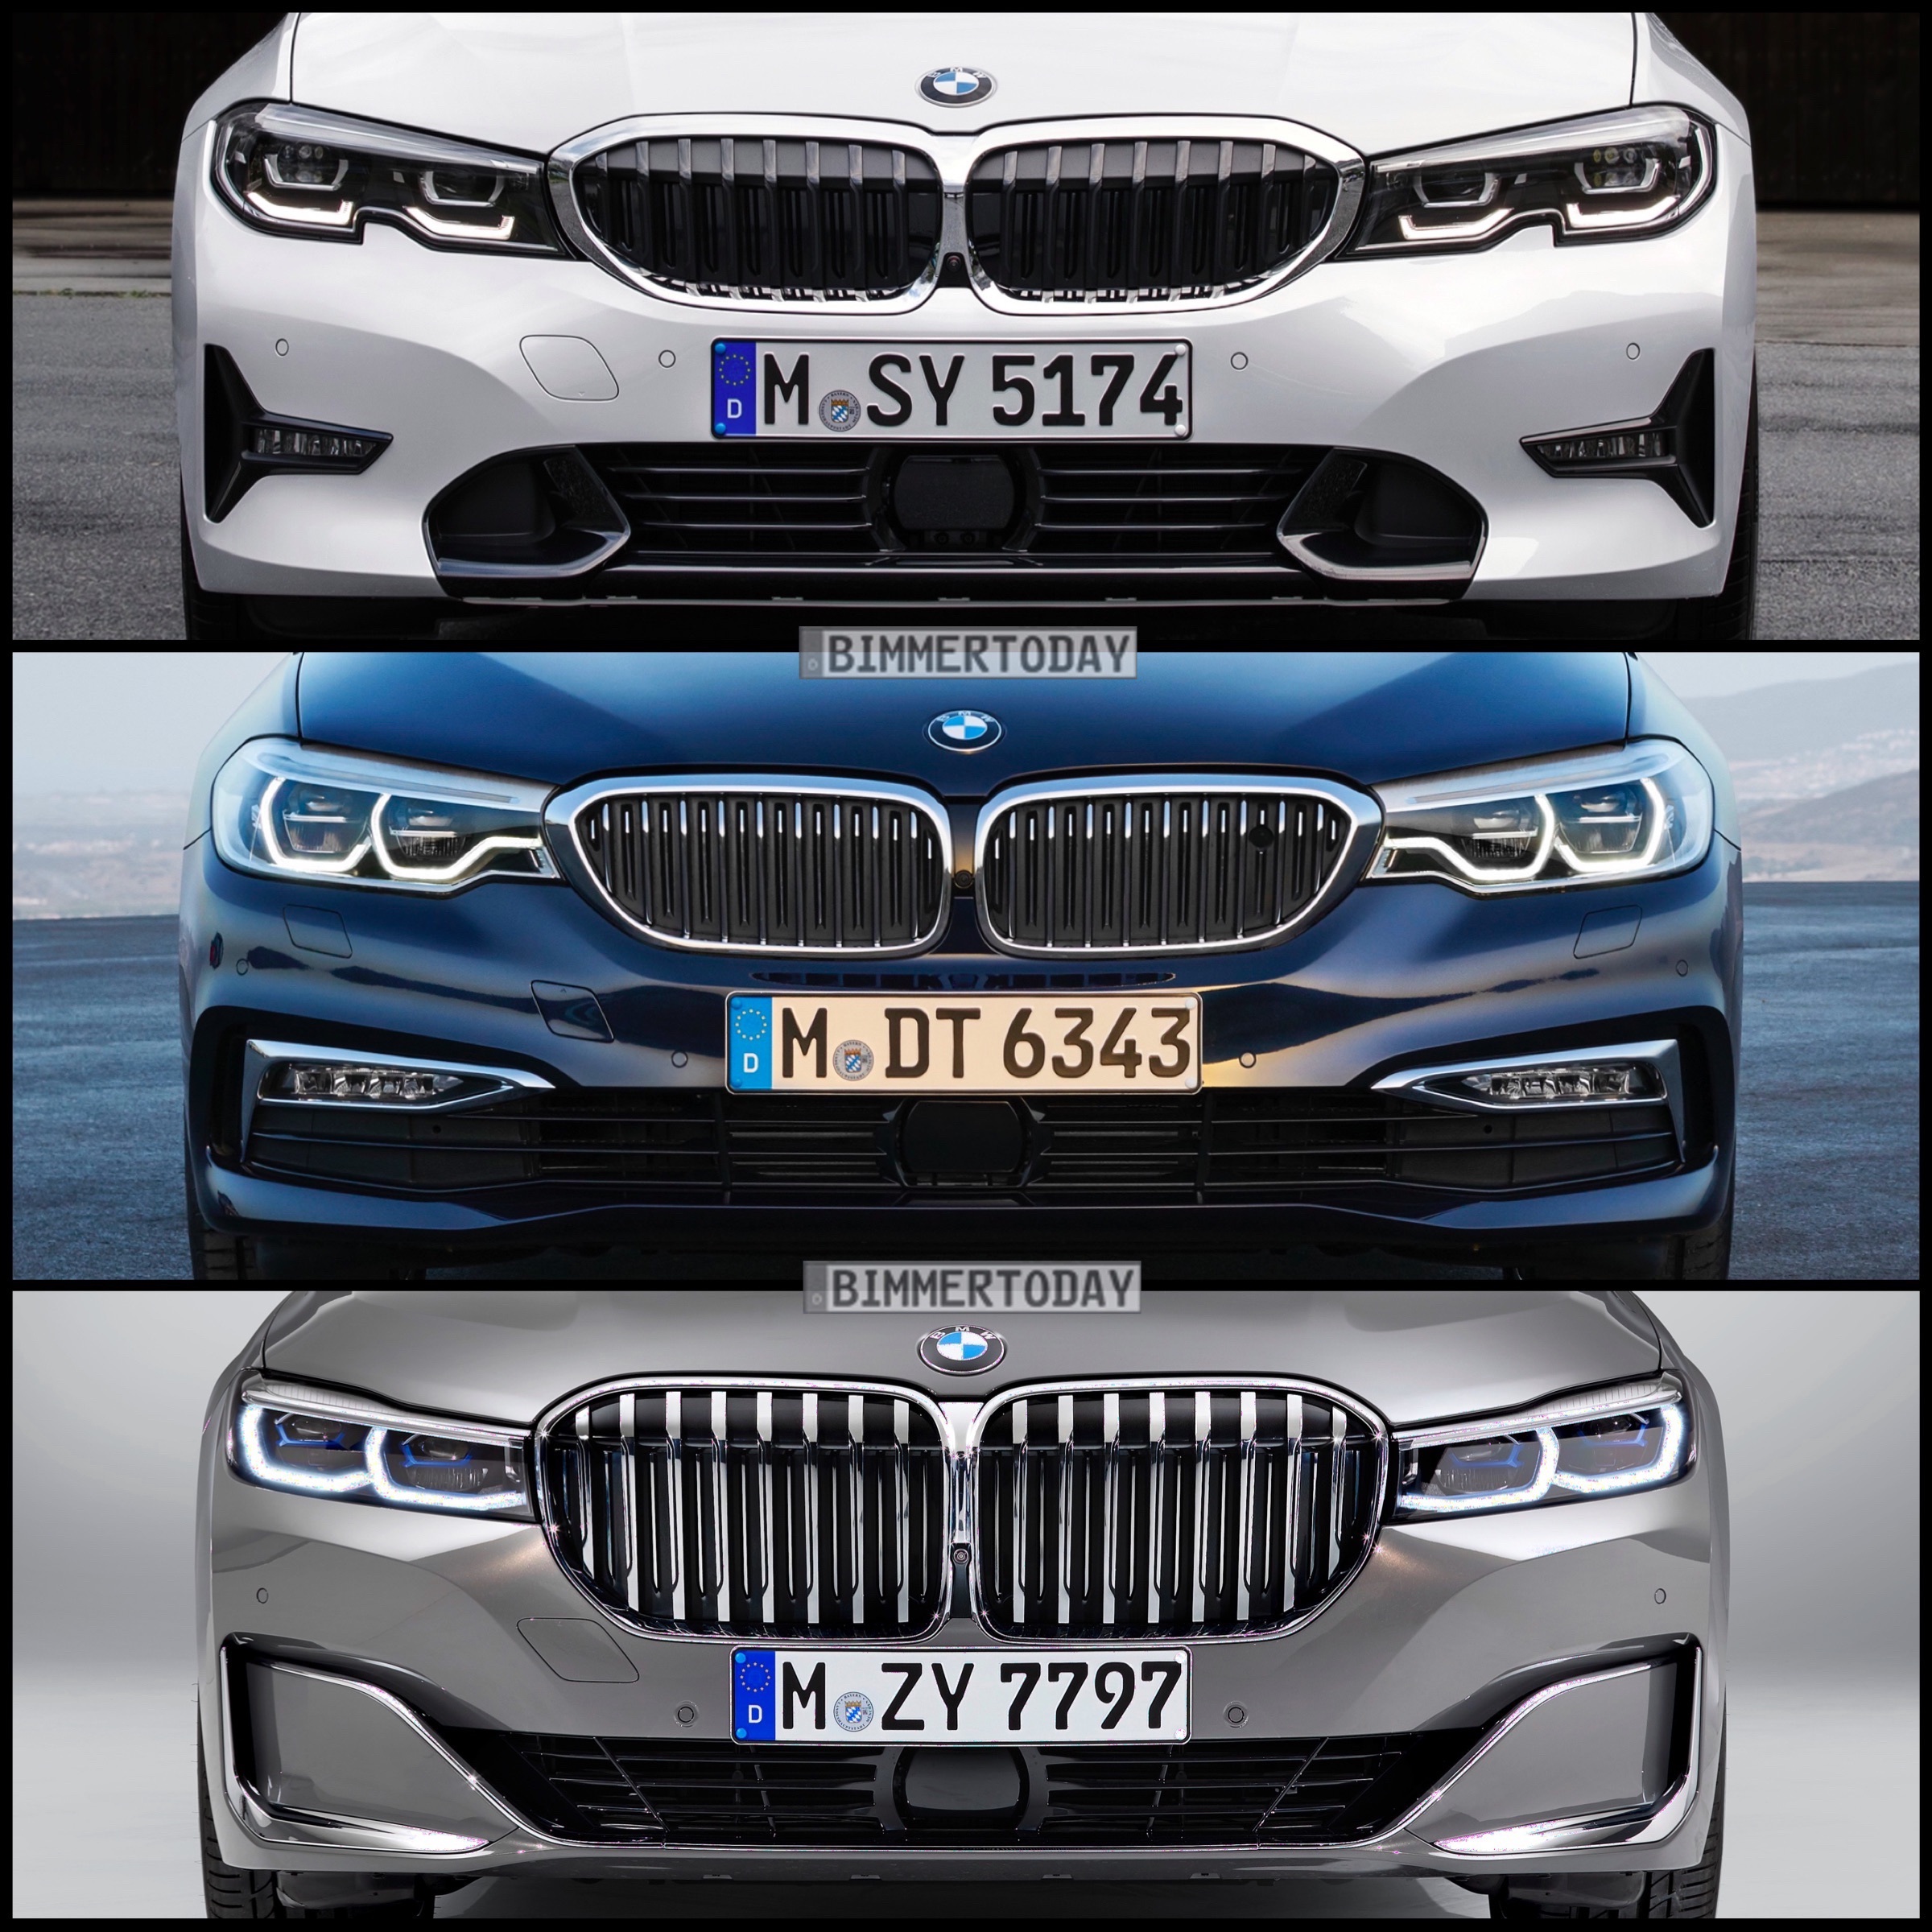 Bild-Vergleich-BMW-3er-G20-5er-G30-7er-G11-LCI-Limousine-2019-03.jpg